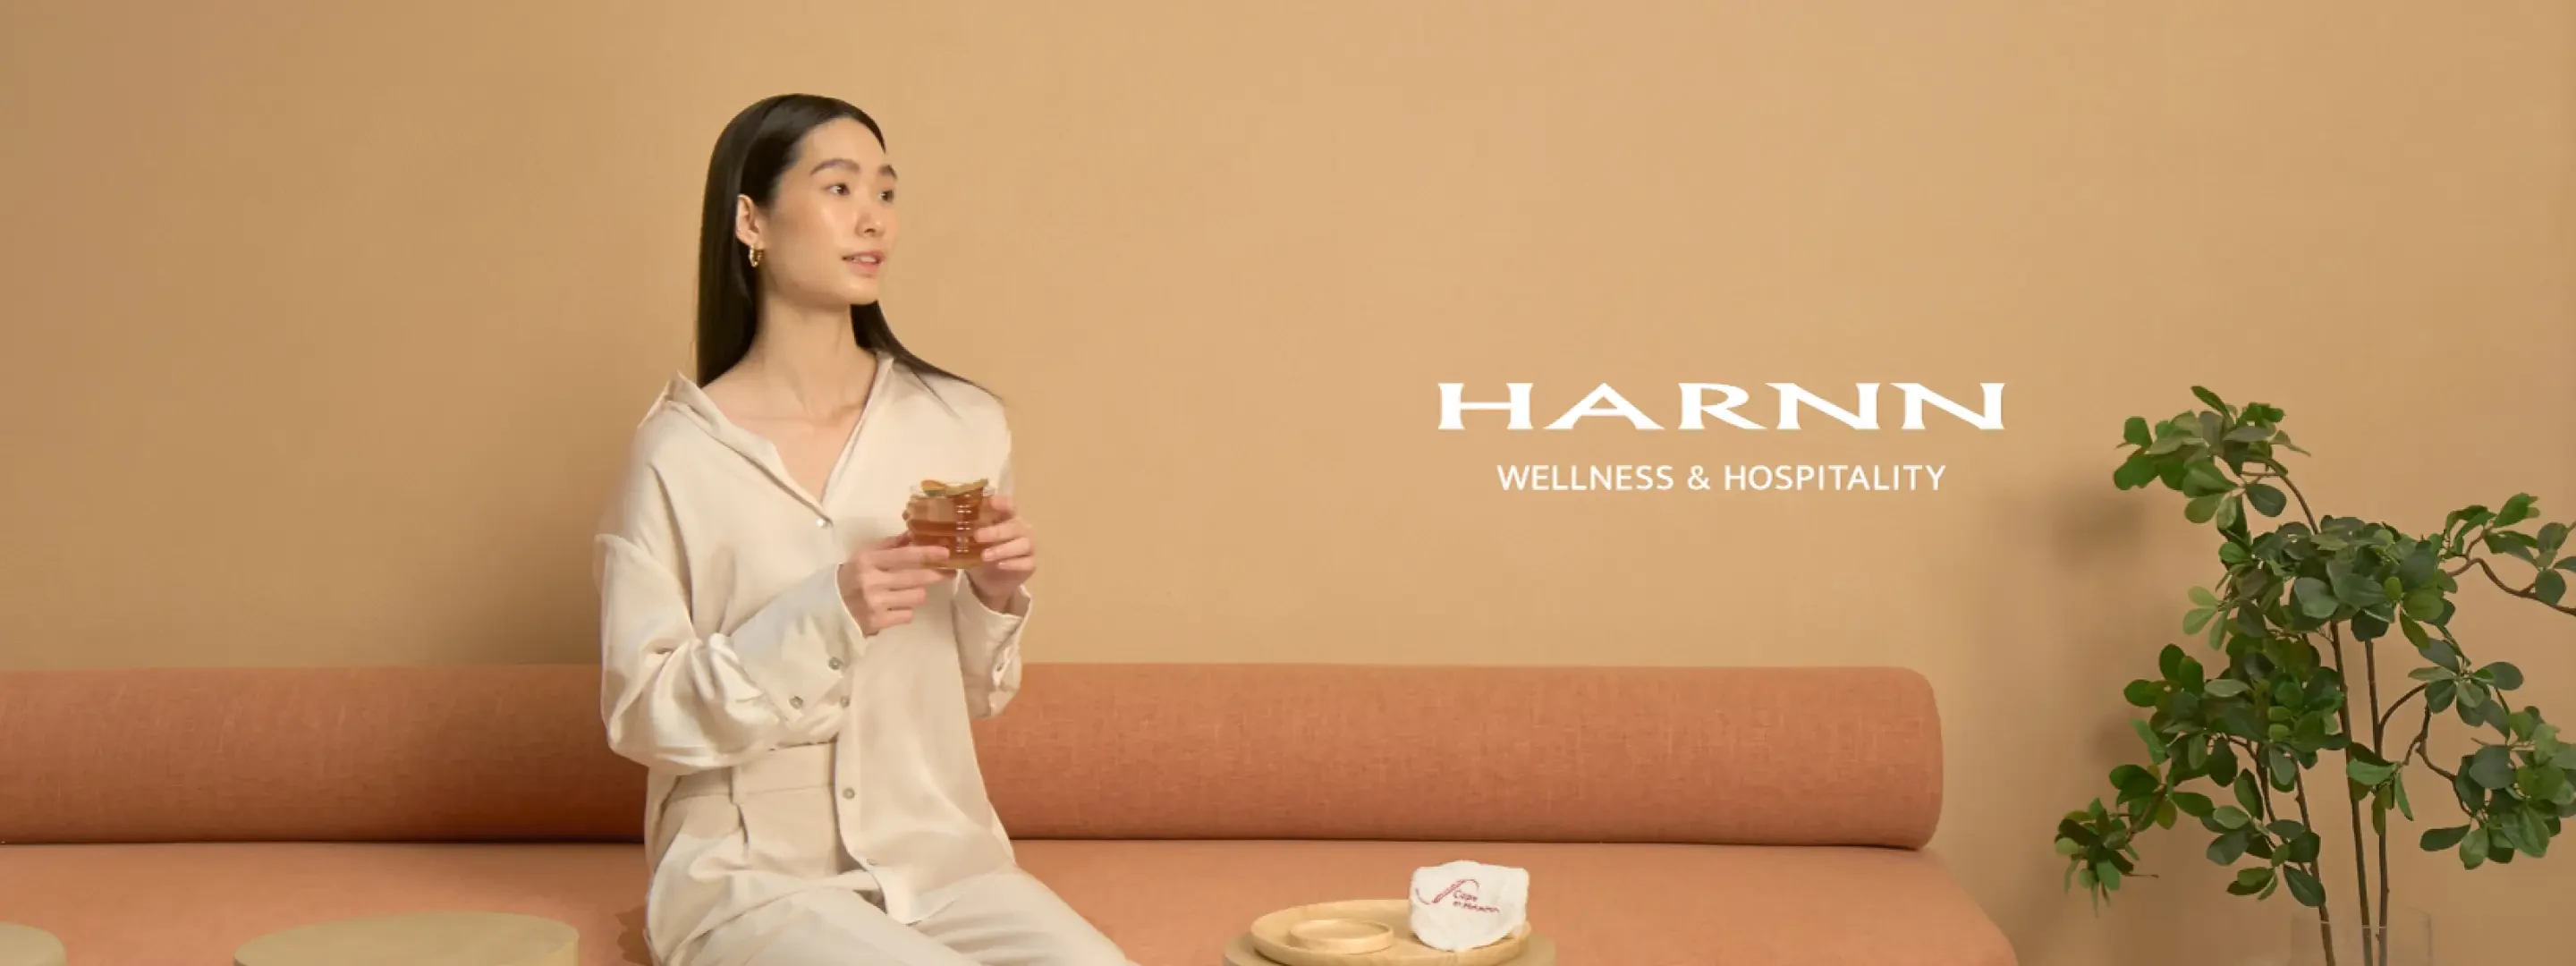 HARNN Wellness and Hospitality